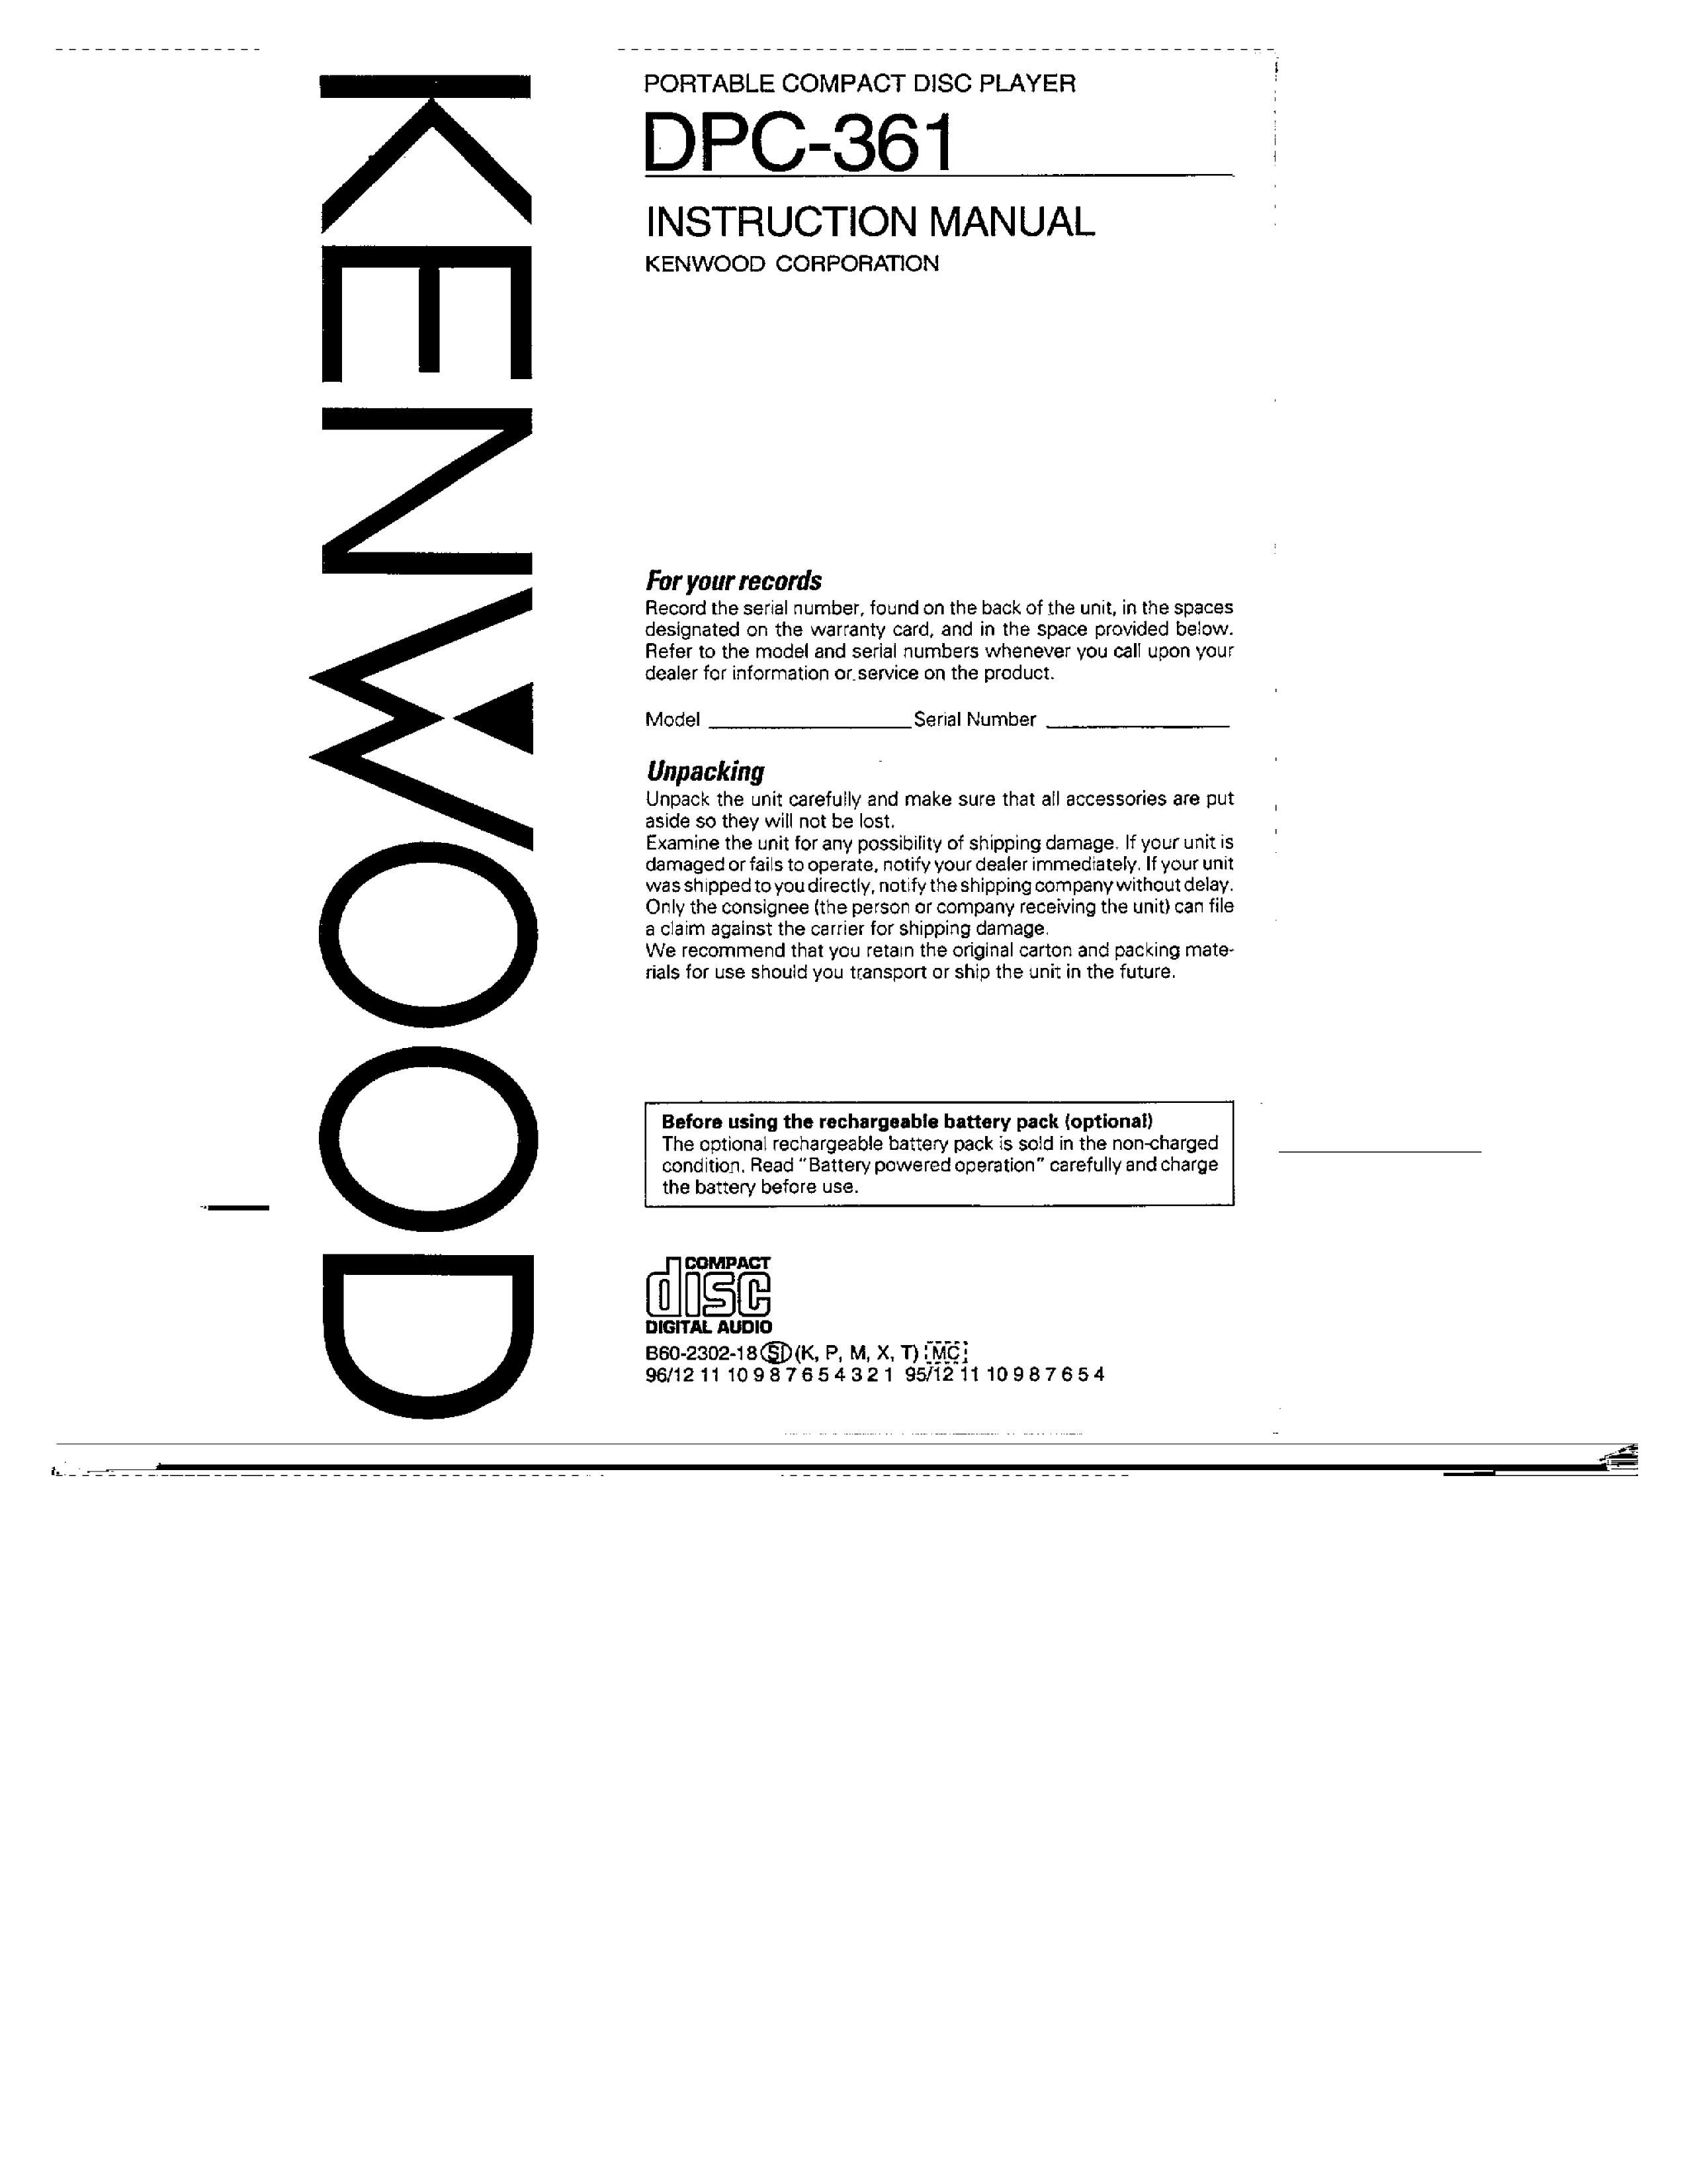 Kenwood DPC-361 Security Camera User Manual